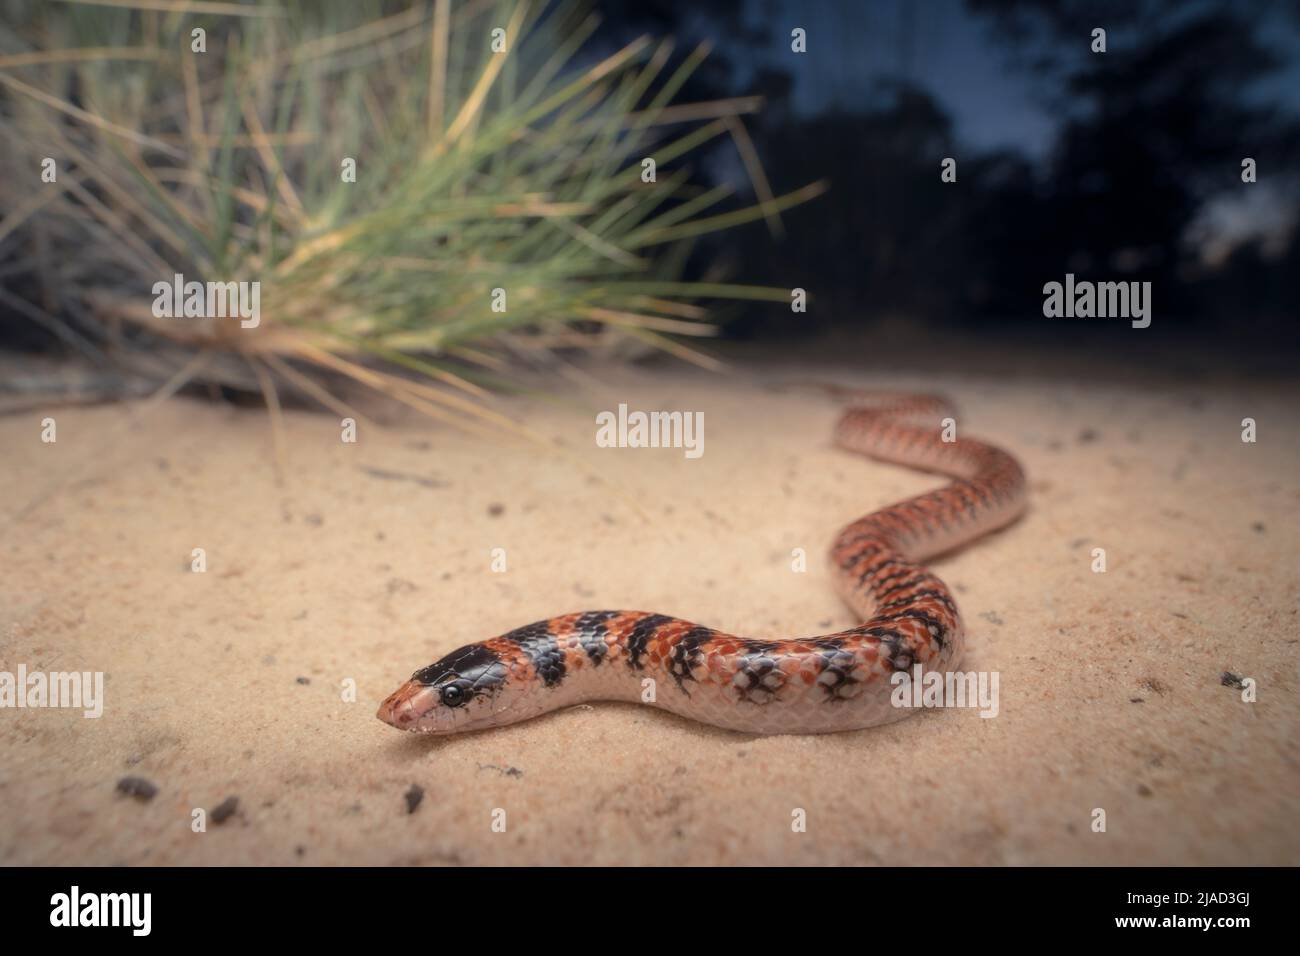 Close-up of a wild southern shovel-nosed snake (Brachyurophis semifasciatus) in sandy mallee habitat, Australia Stock Photo